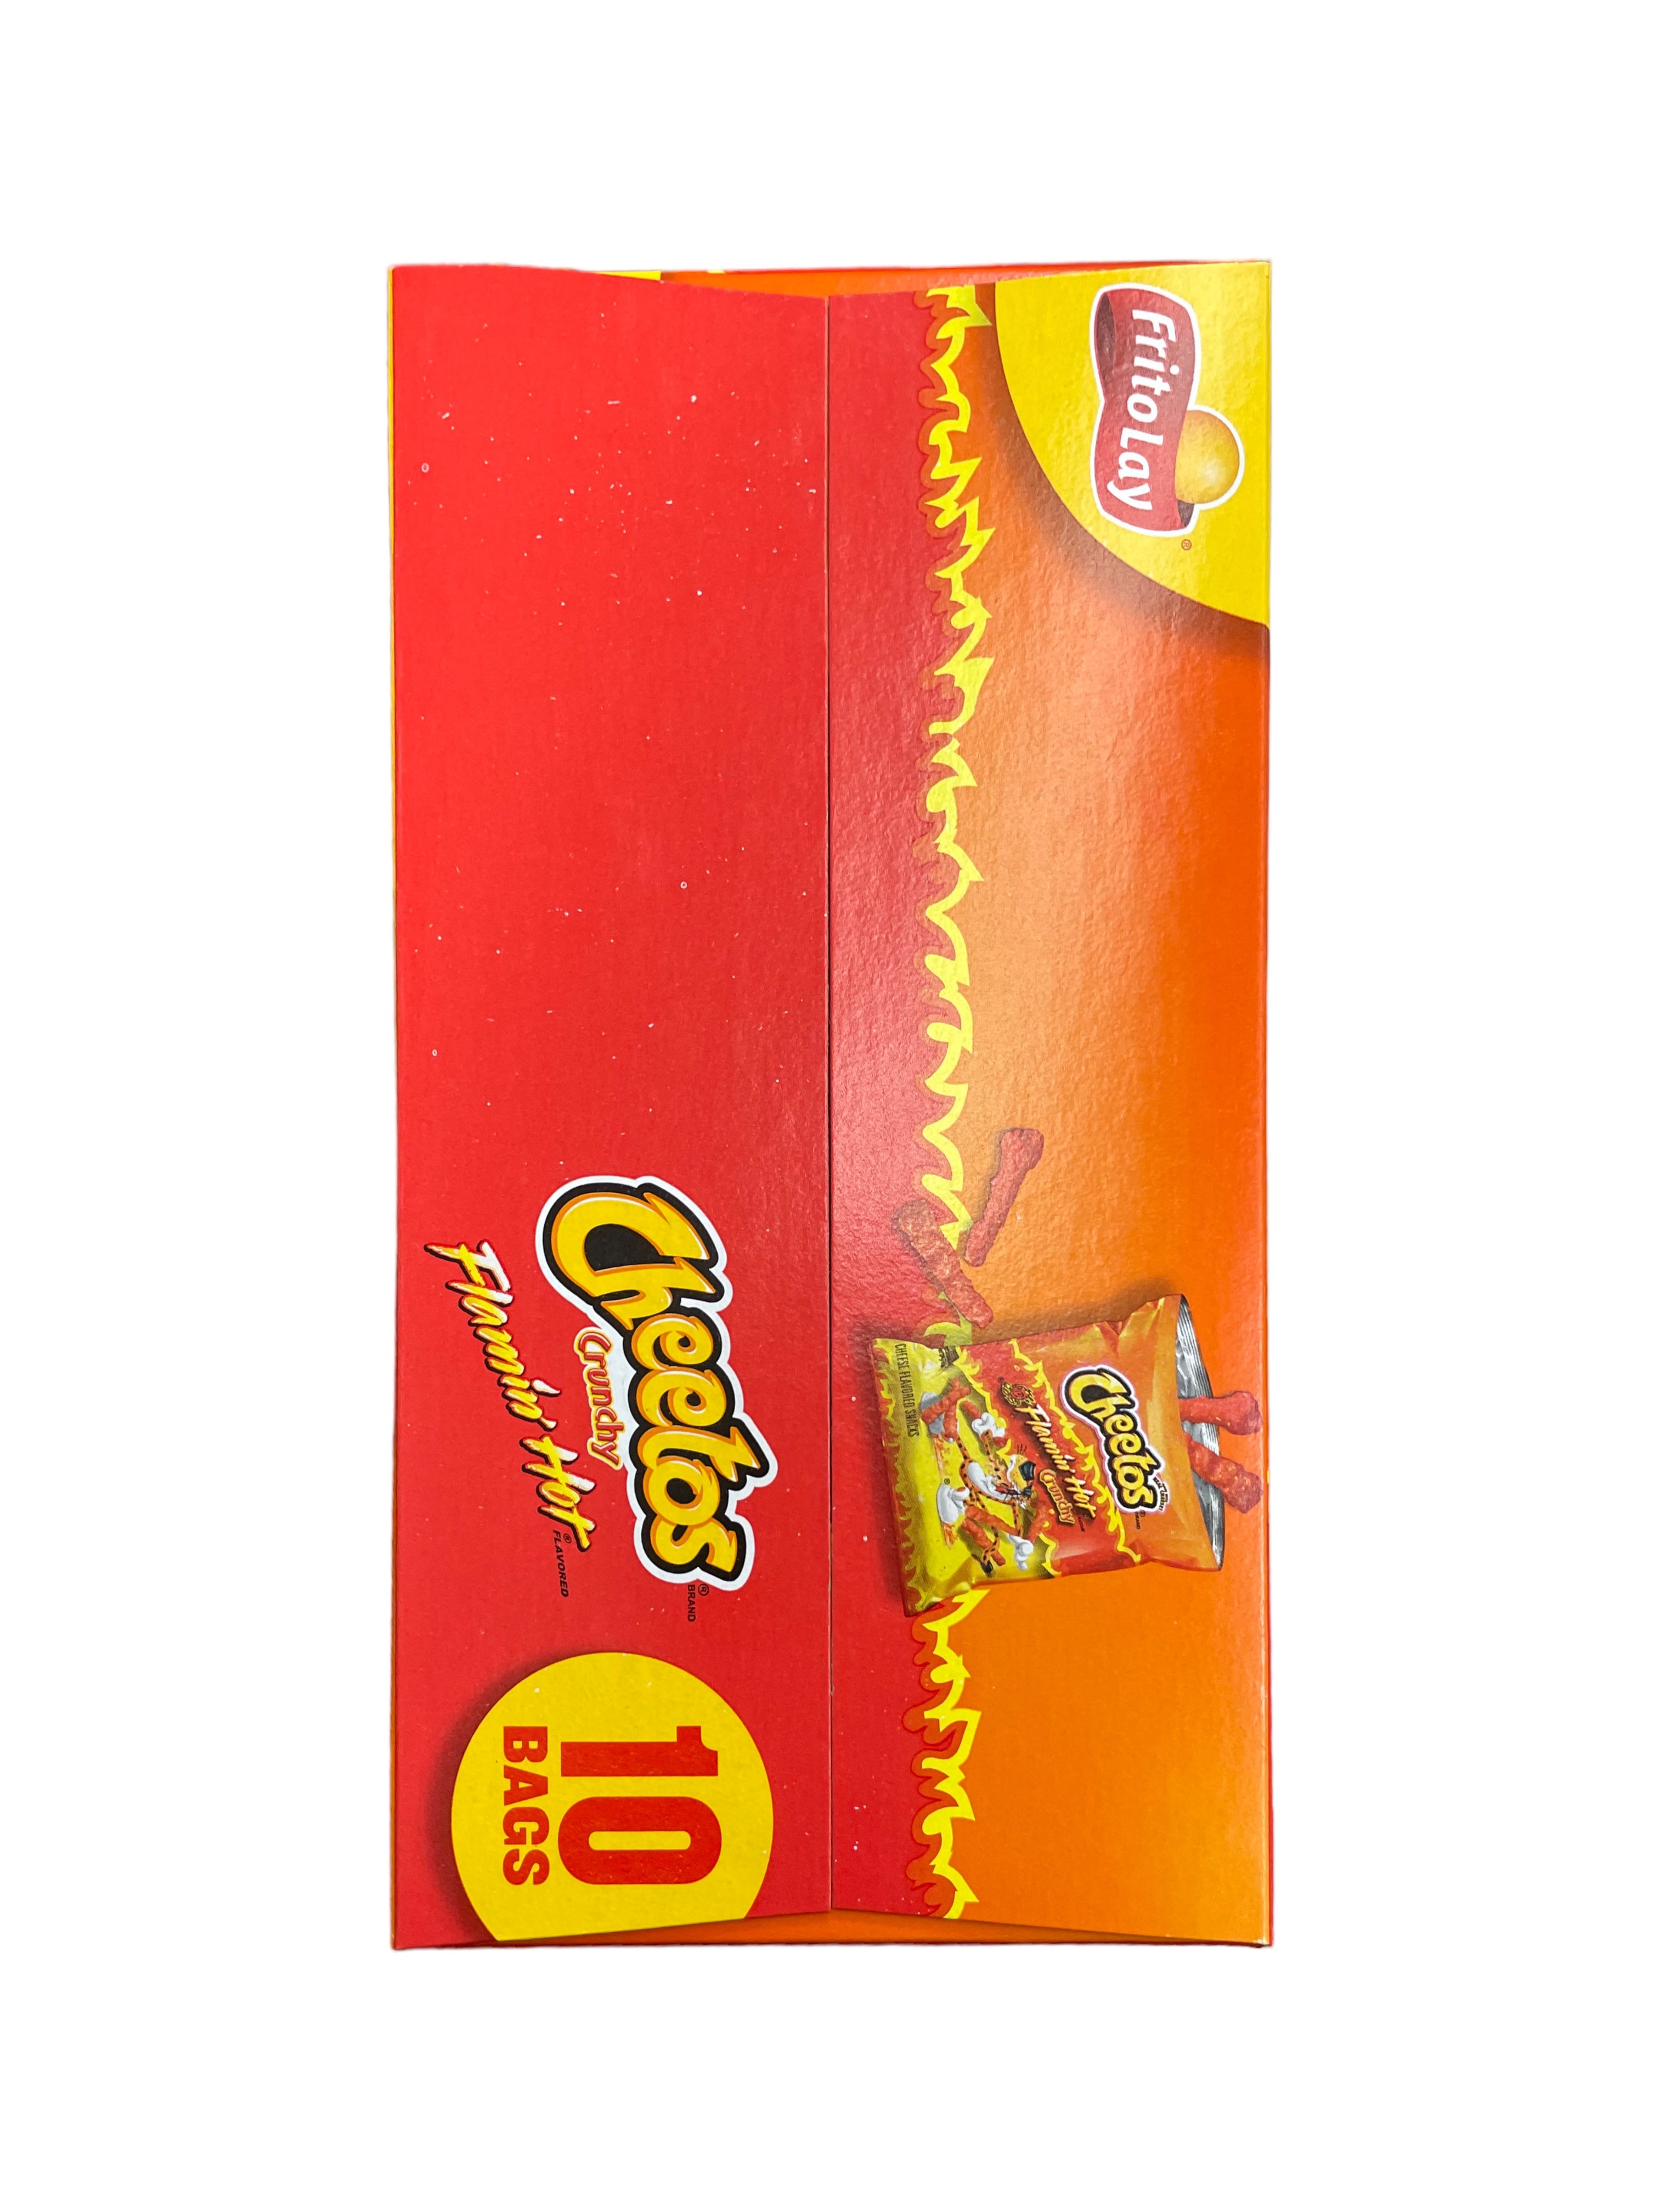 Flamin’ Hot Crunchy Cheetos, 1 oz (10 Pack)